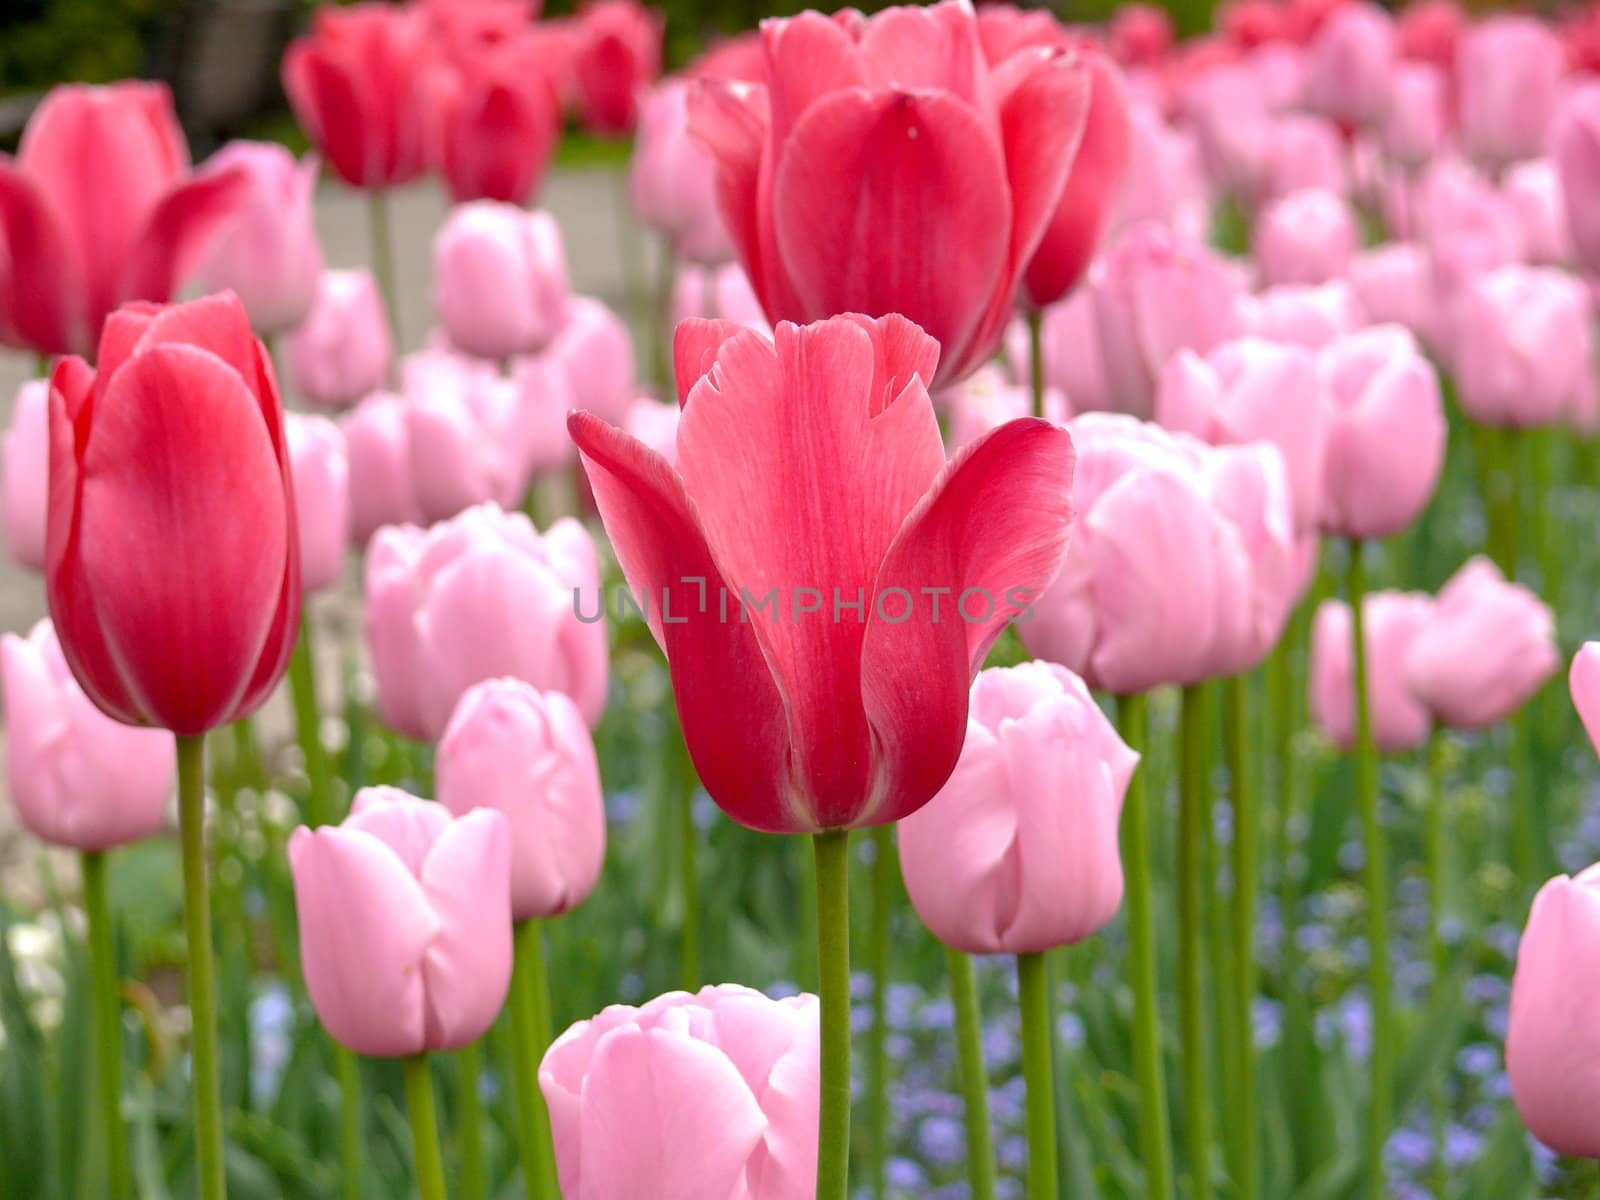 Many fresh bloom pink tulips in spring day by Stoyanov